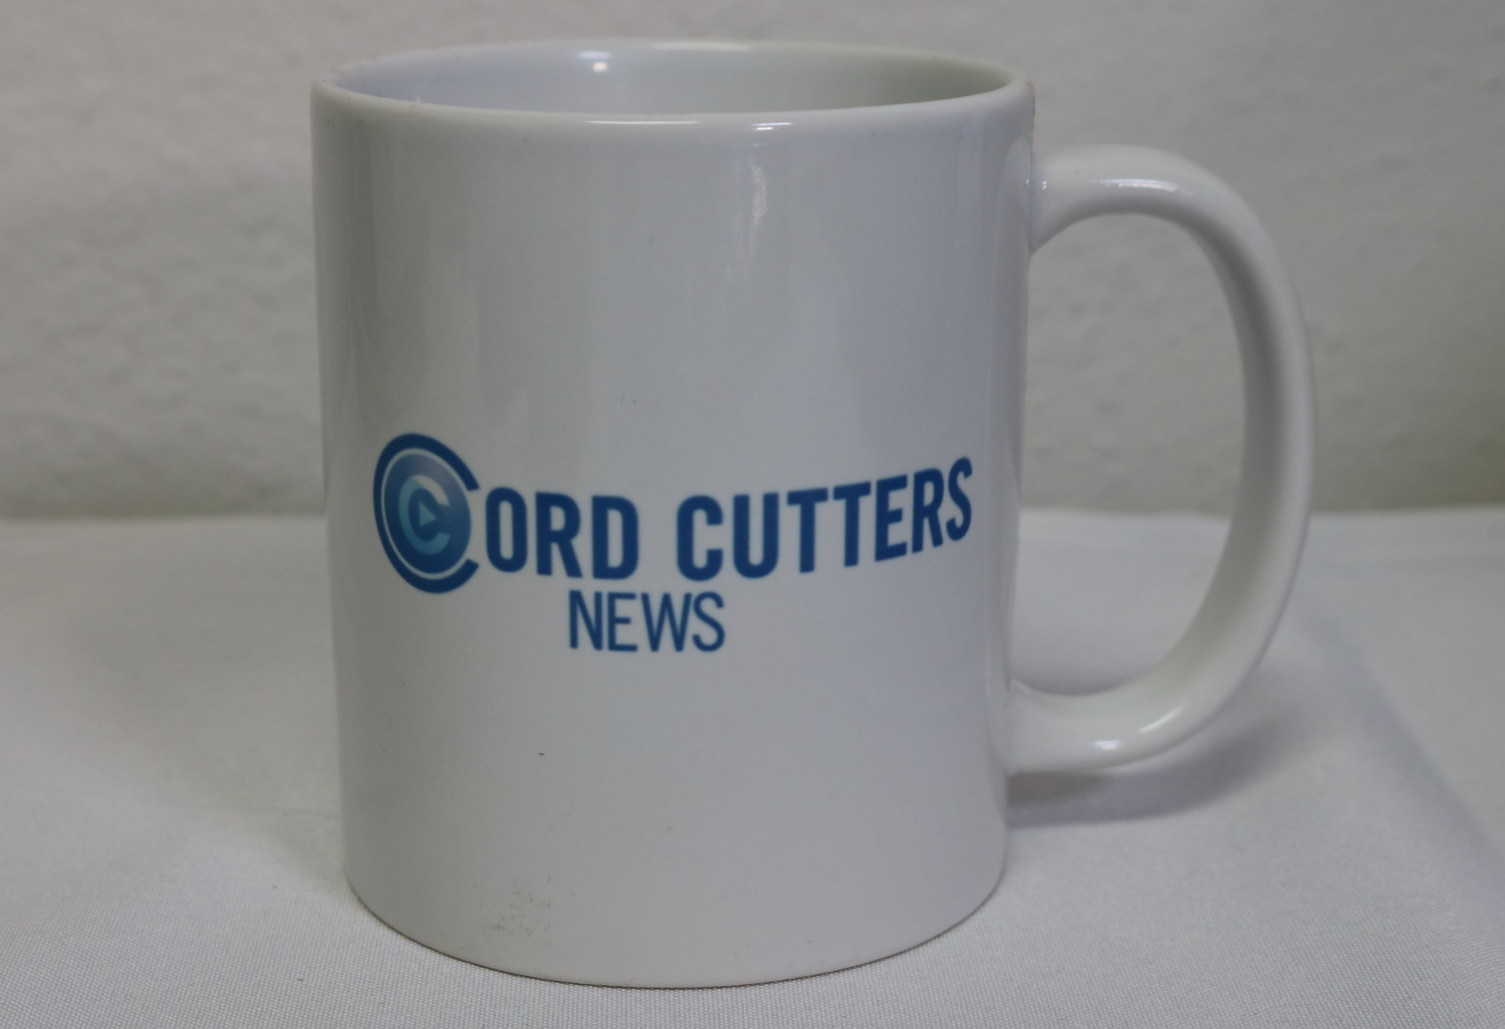 mug with cord cutters news logo